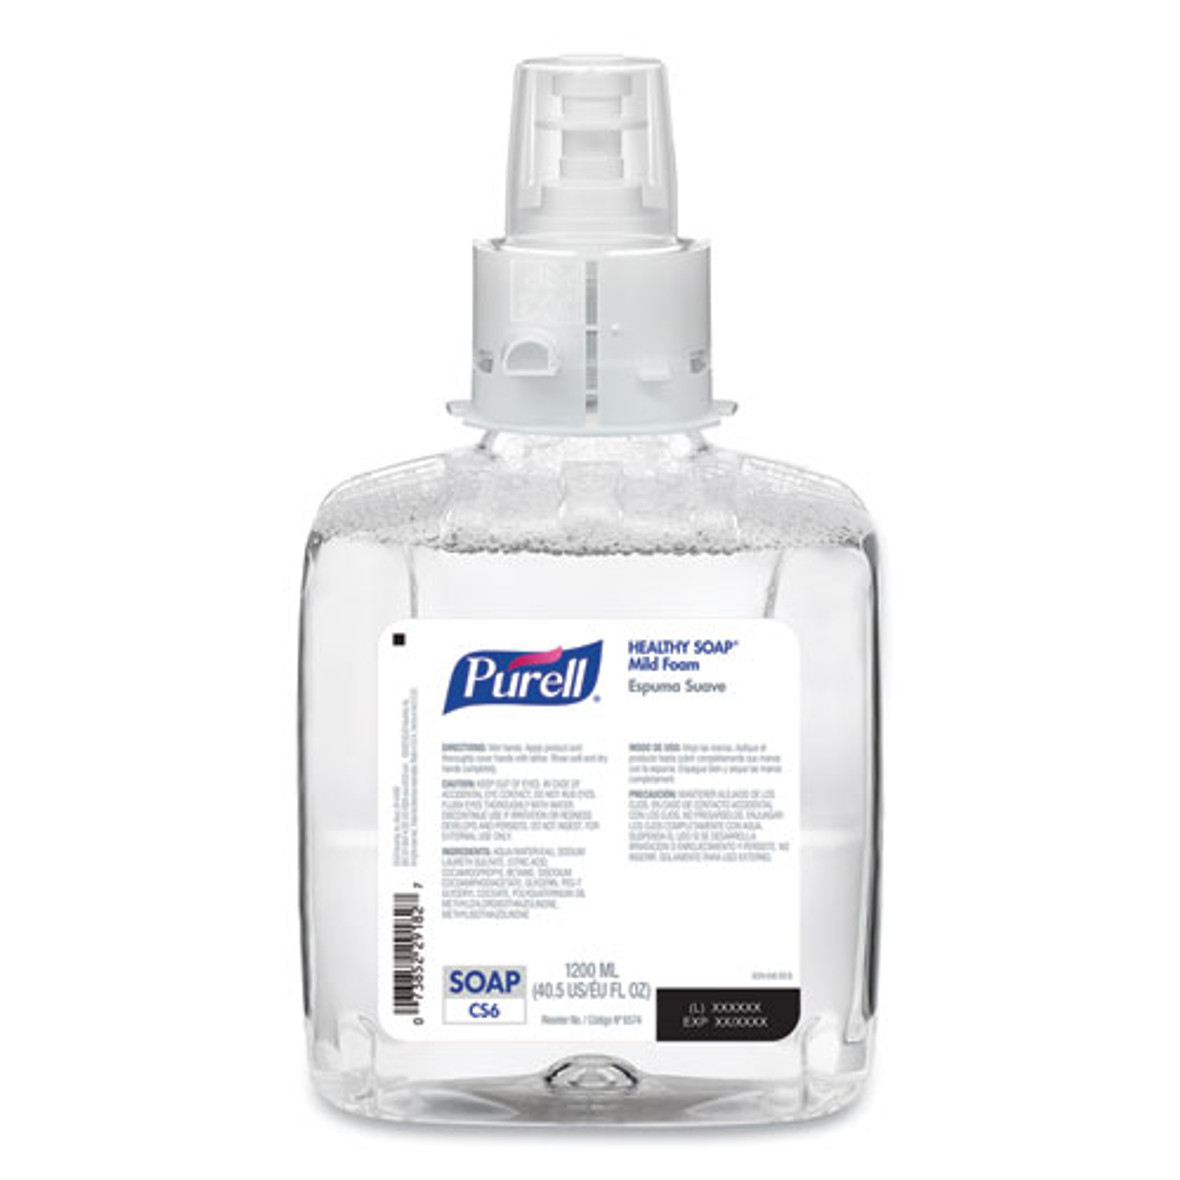 PURELL® HEALTHY SOAP Mild Foam, For CS6 Dispensers, Fragrance-Free